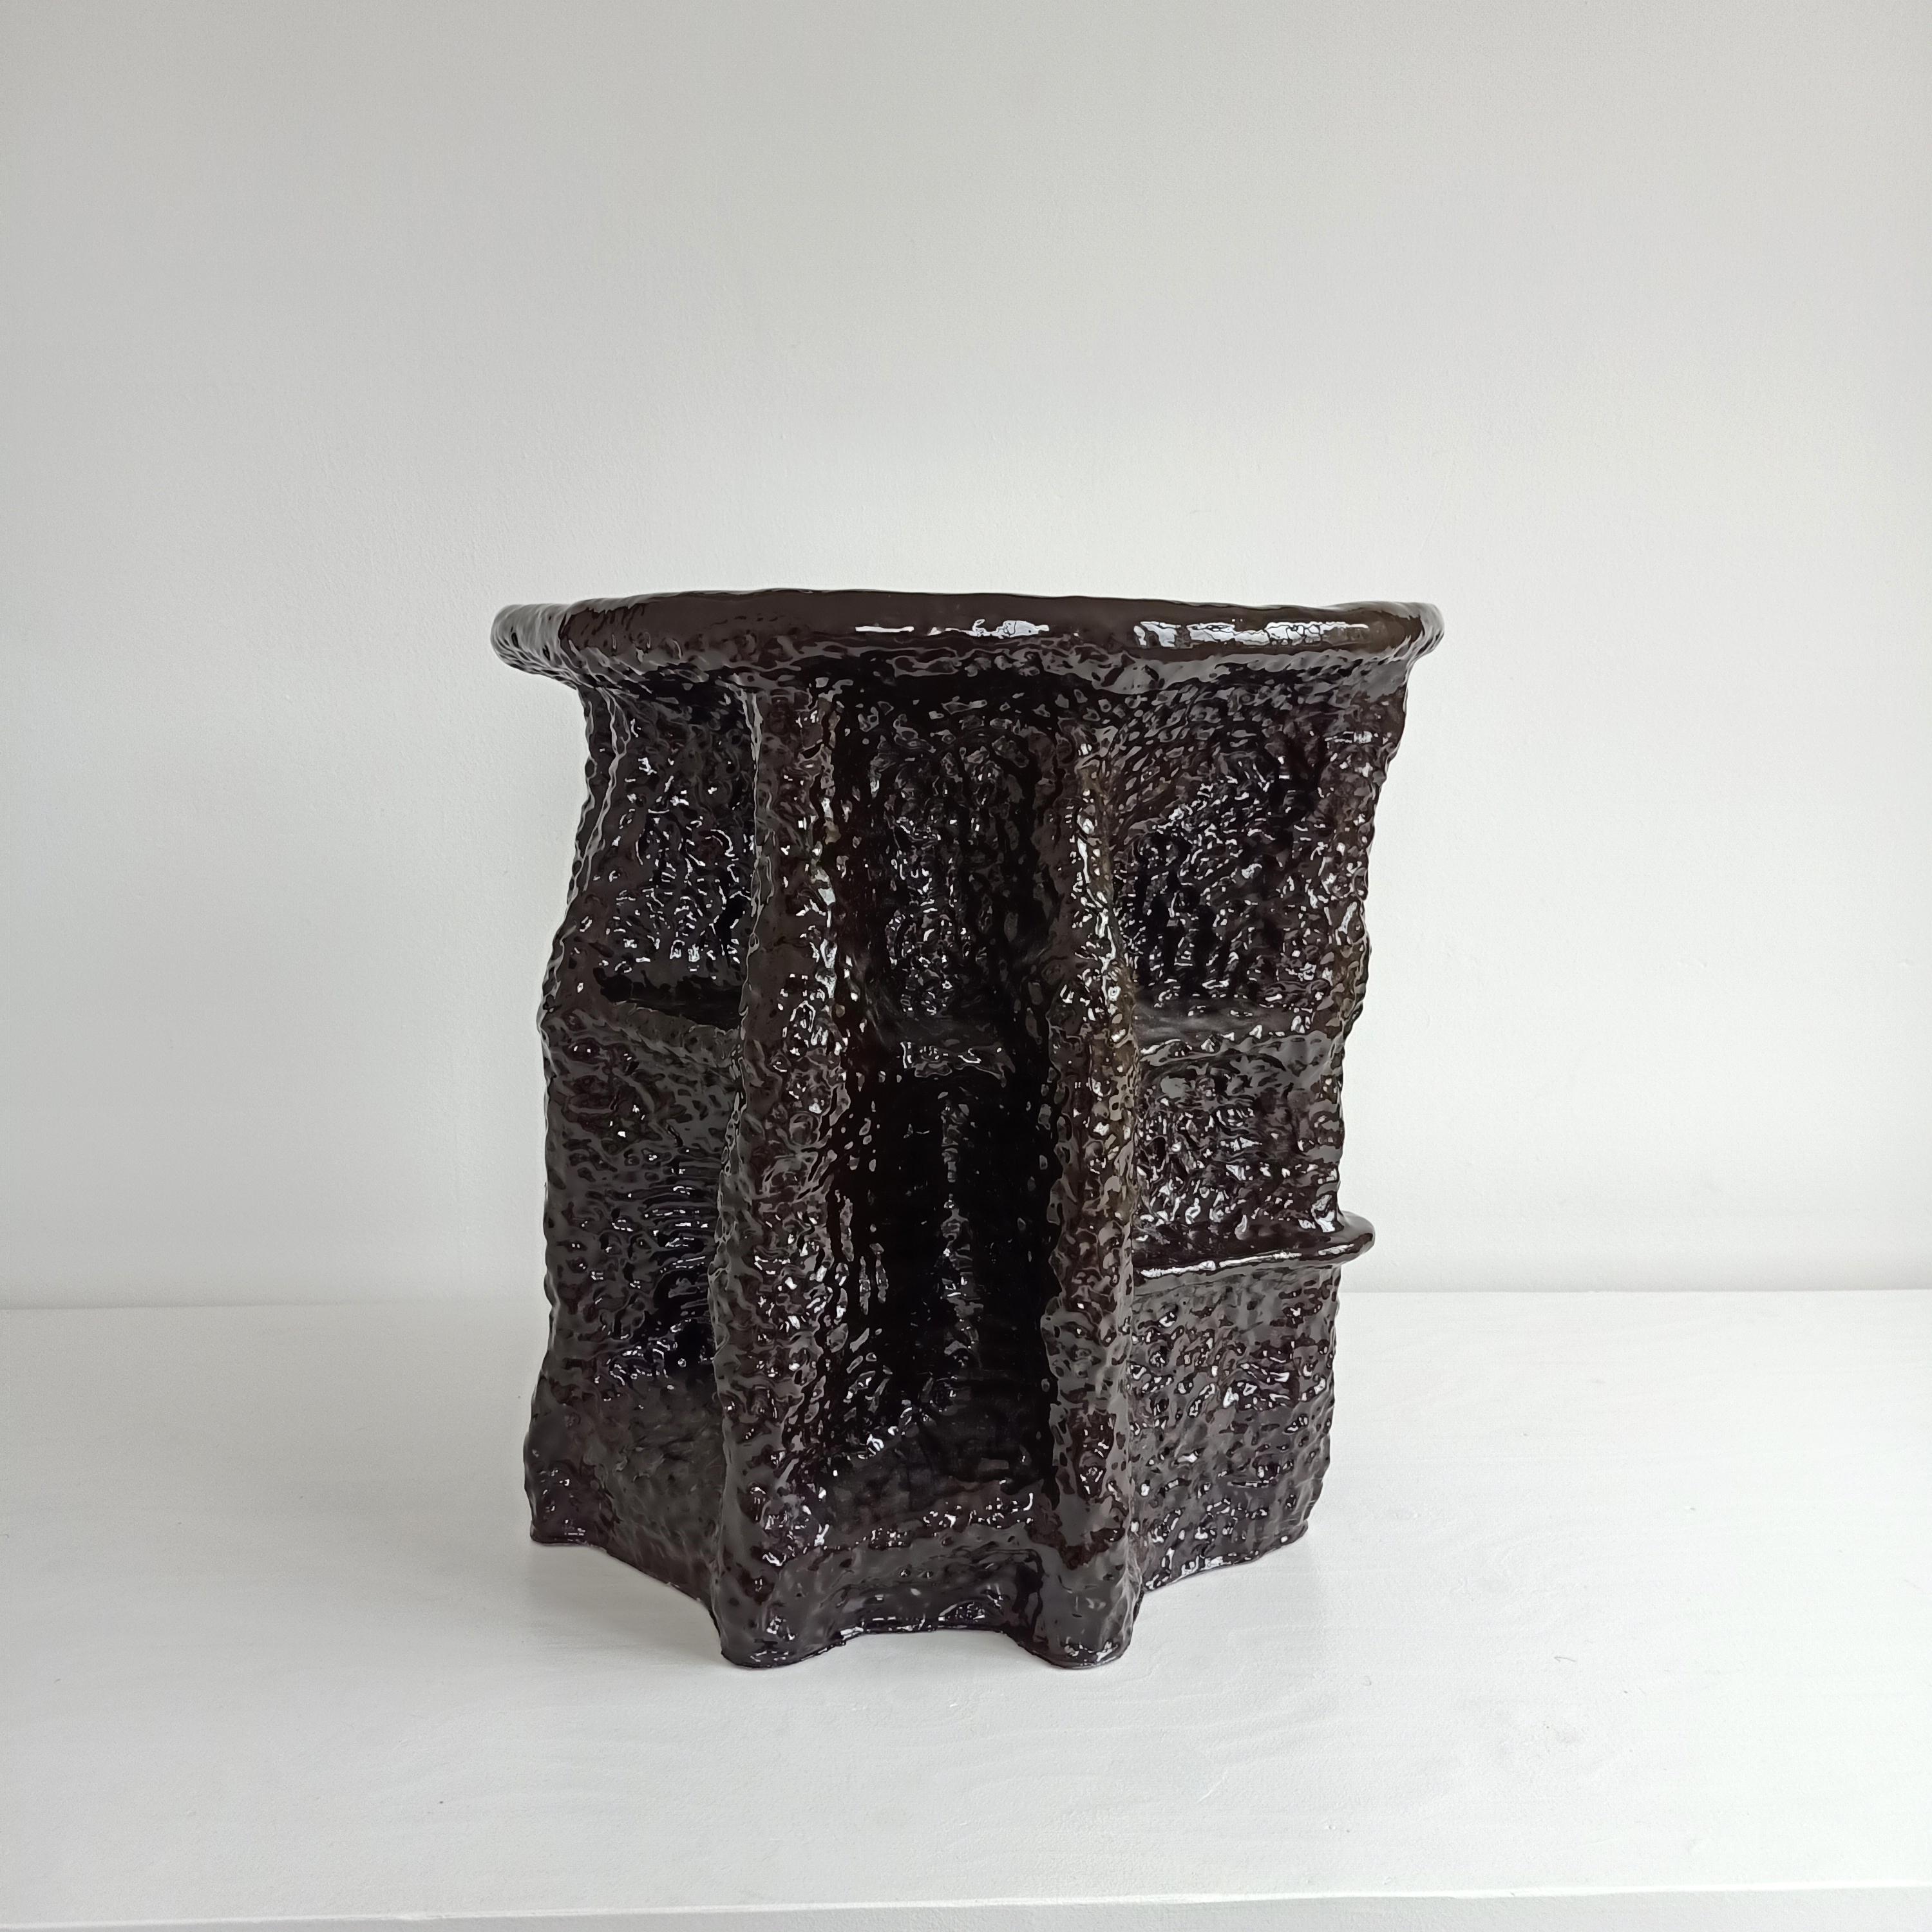 Contemporary Ceramic Furniture, Table, 2020, Rutger de Regt, the Netherlands 2